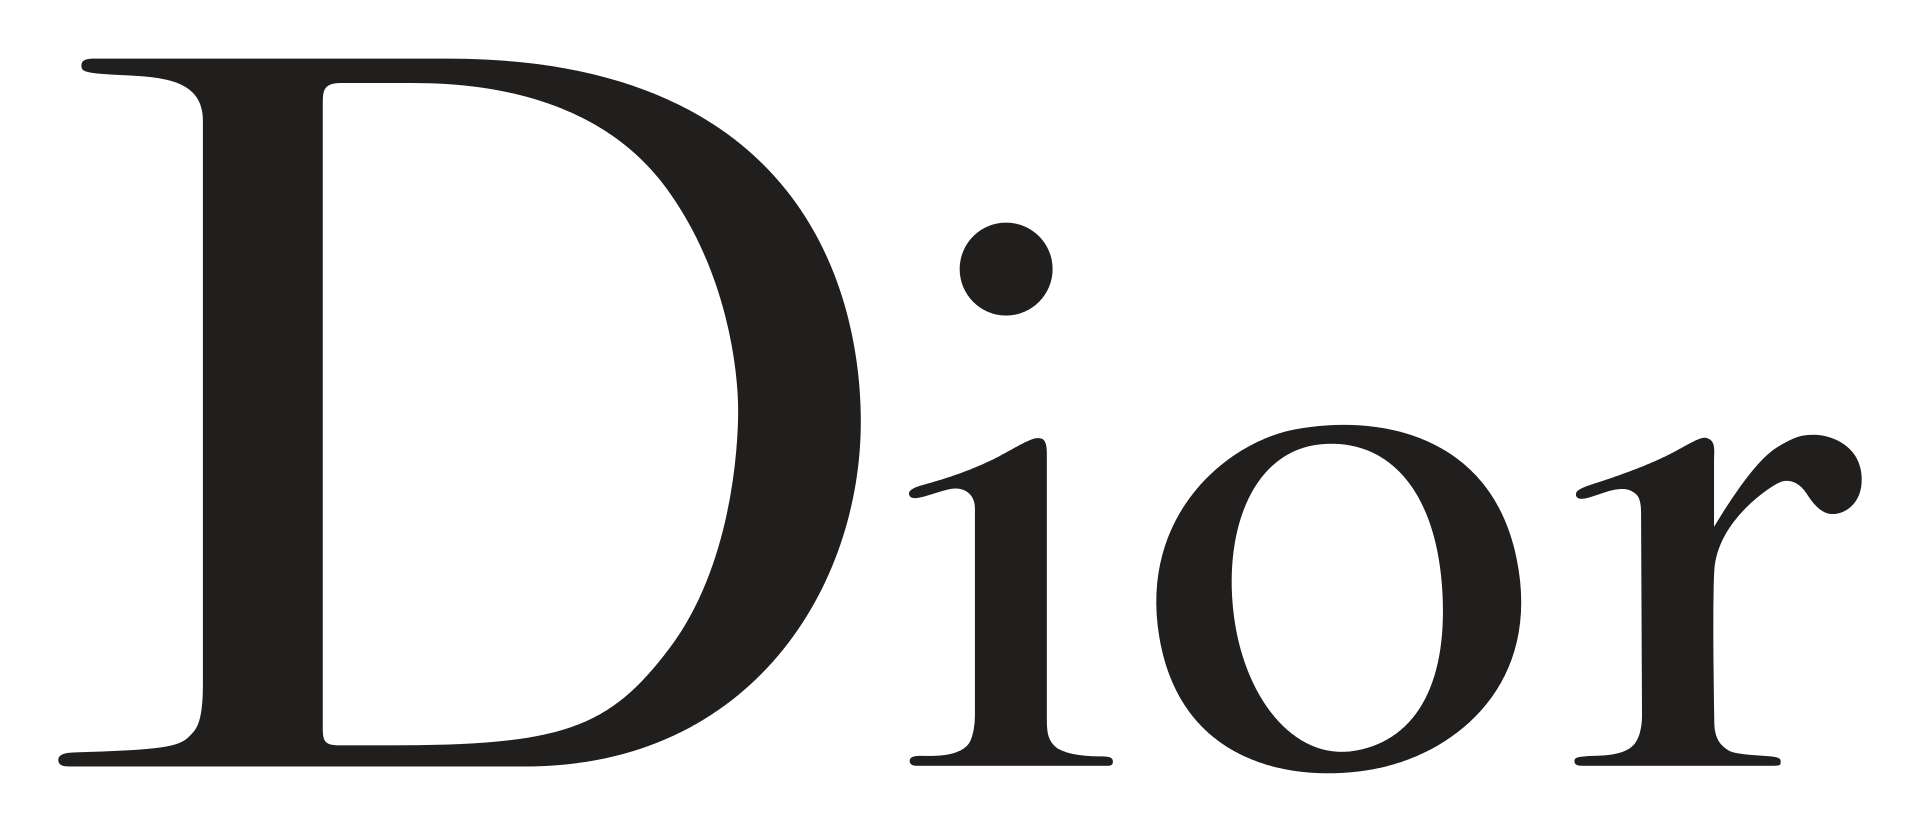 Dior Logo.svg